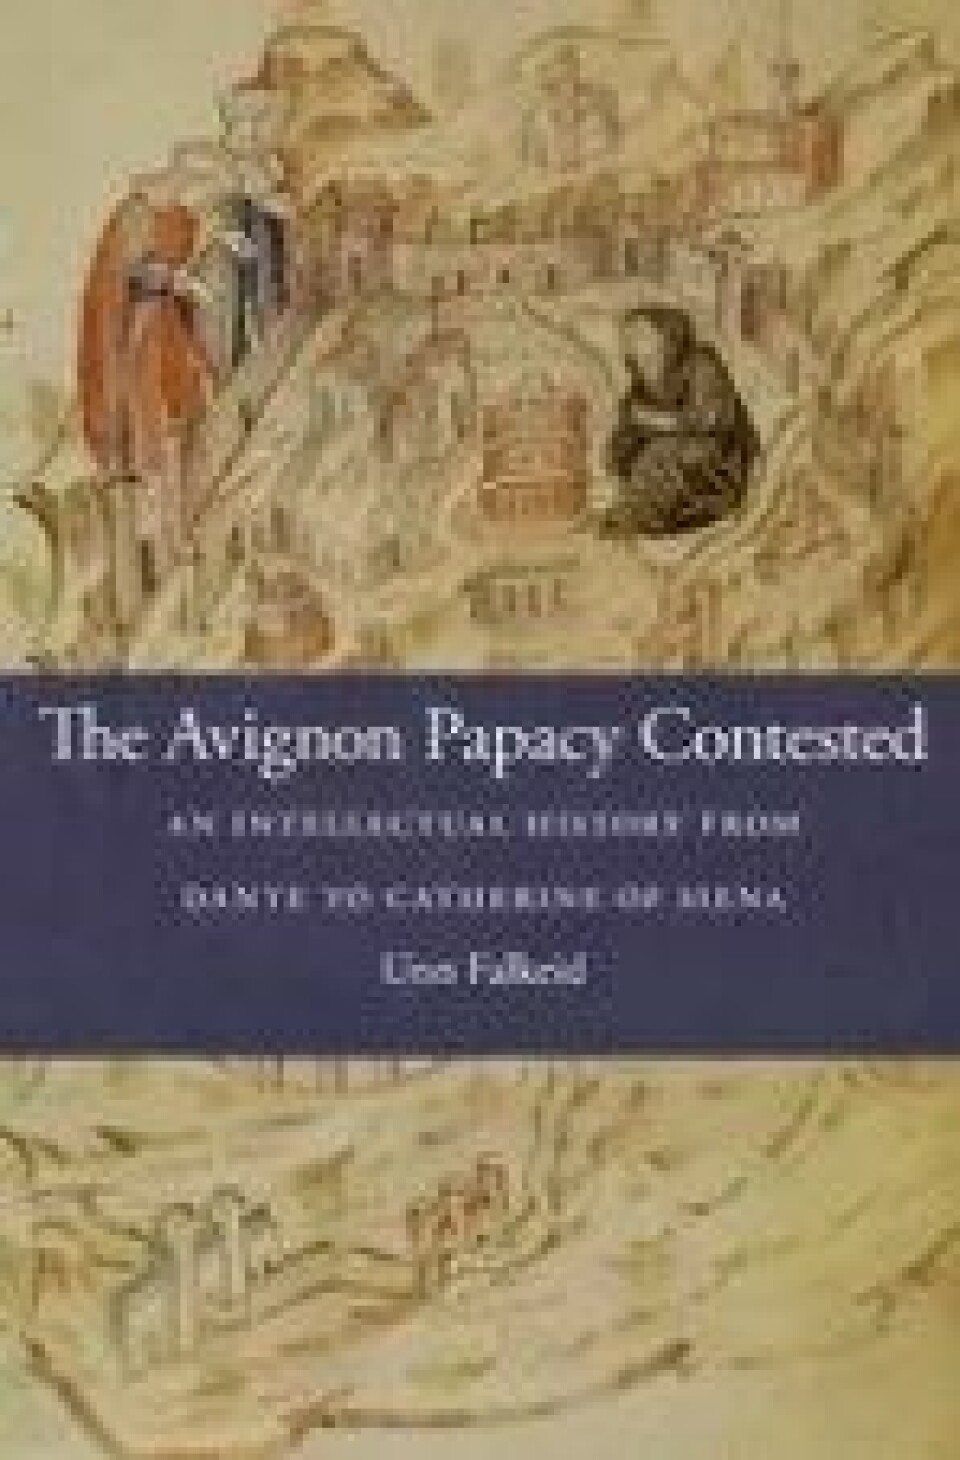 The Avignon Papacy Contested: An Intellectual History from Dante to Catherine of Siena av Unn Falkeid. Harvard University Press, Cambridge, 2017.